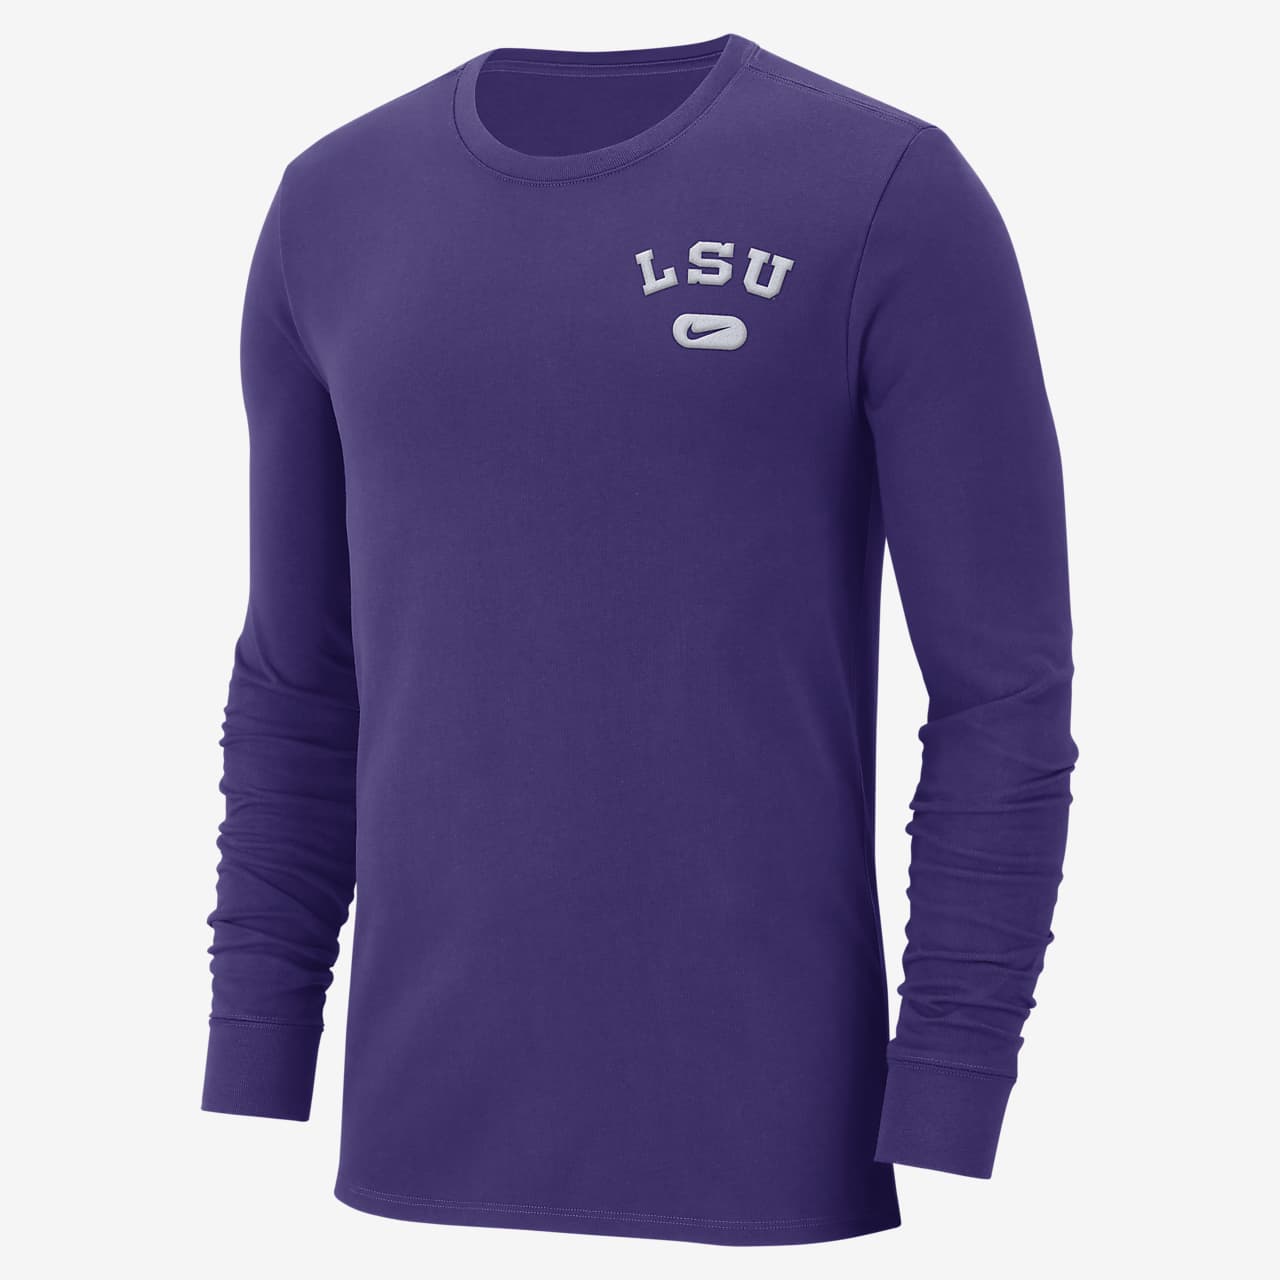 Nike College Elevated Essentials (LSU) Men's Long Sleeve Top 